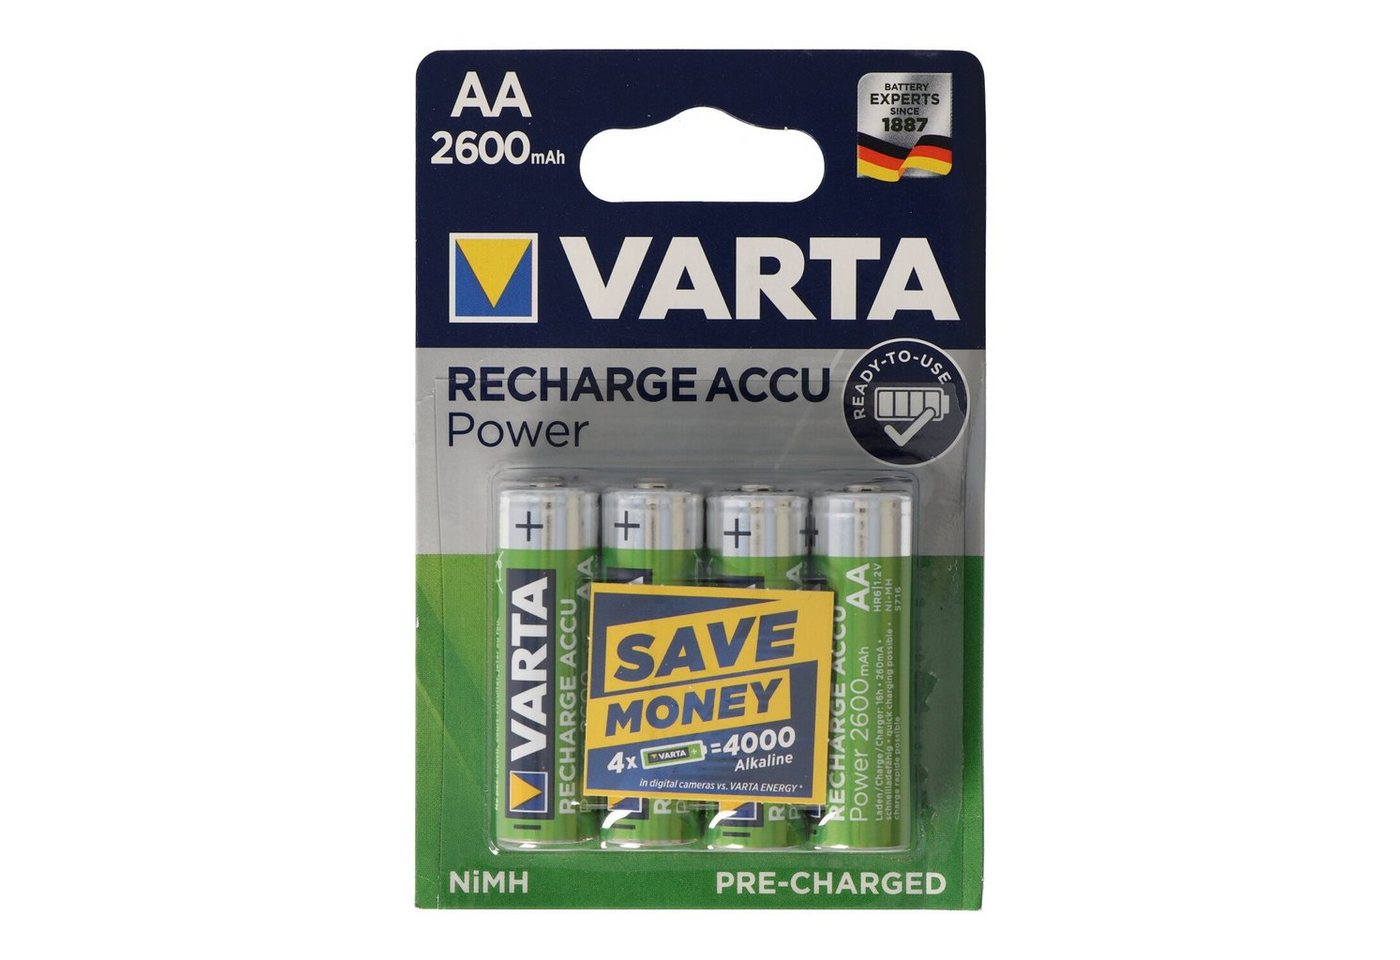 VARTA Varta Ready2Use 2600mAh Mignon AA Akkus 4er Pack inklusive AccuCell A Akku 2600 mAh (1,2 V) von VARTA